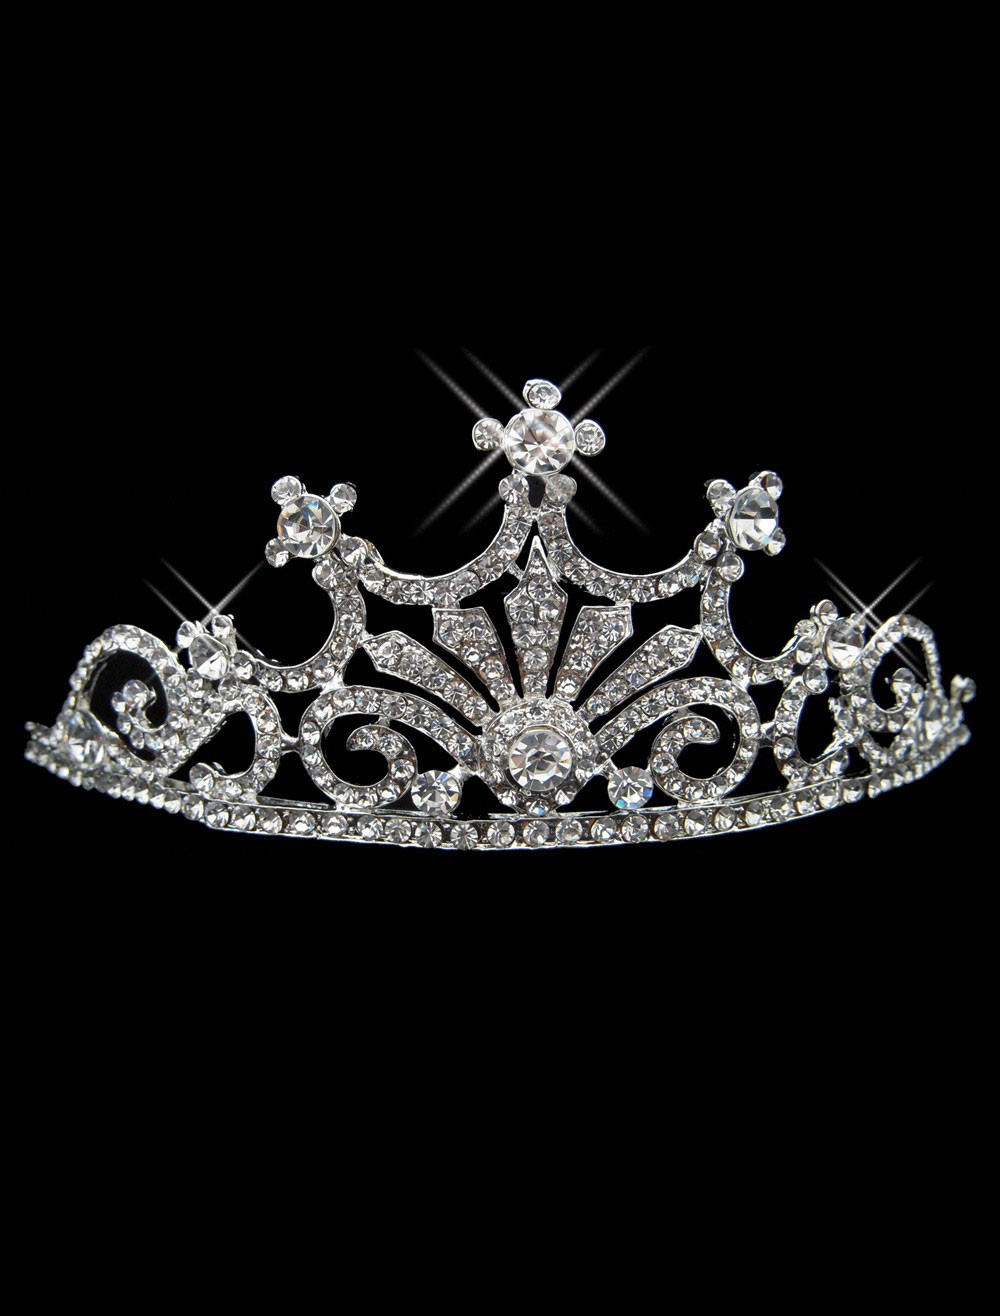 Download Royal Queen Crown Wallpaper Mobile #t8mc6 hdxwallpaperz.com